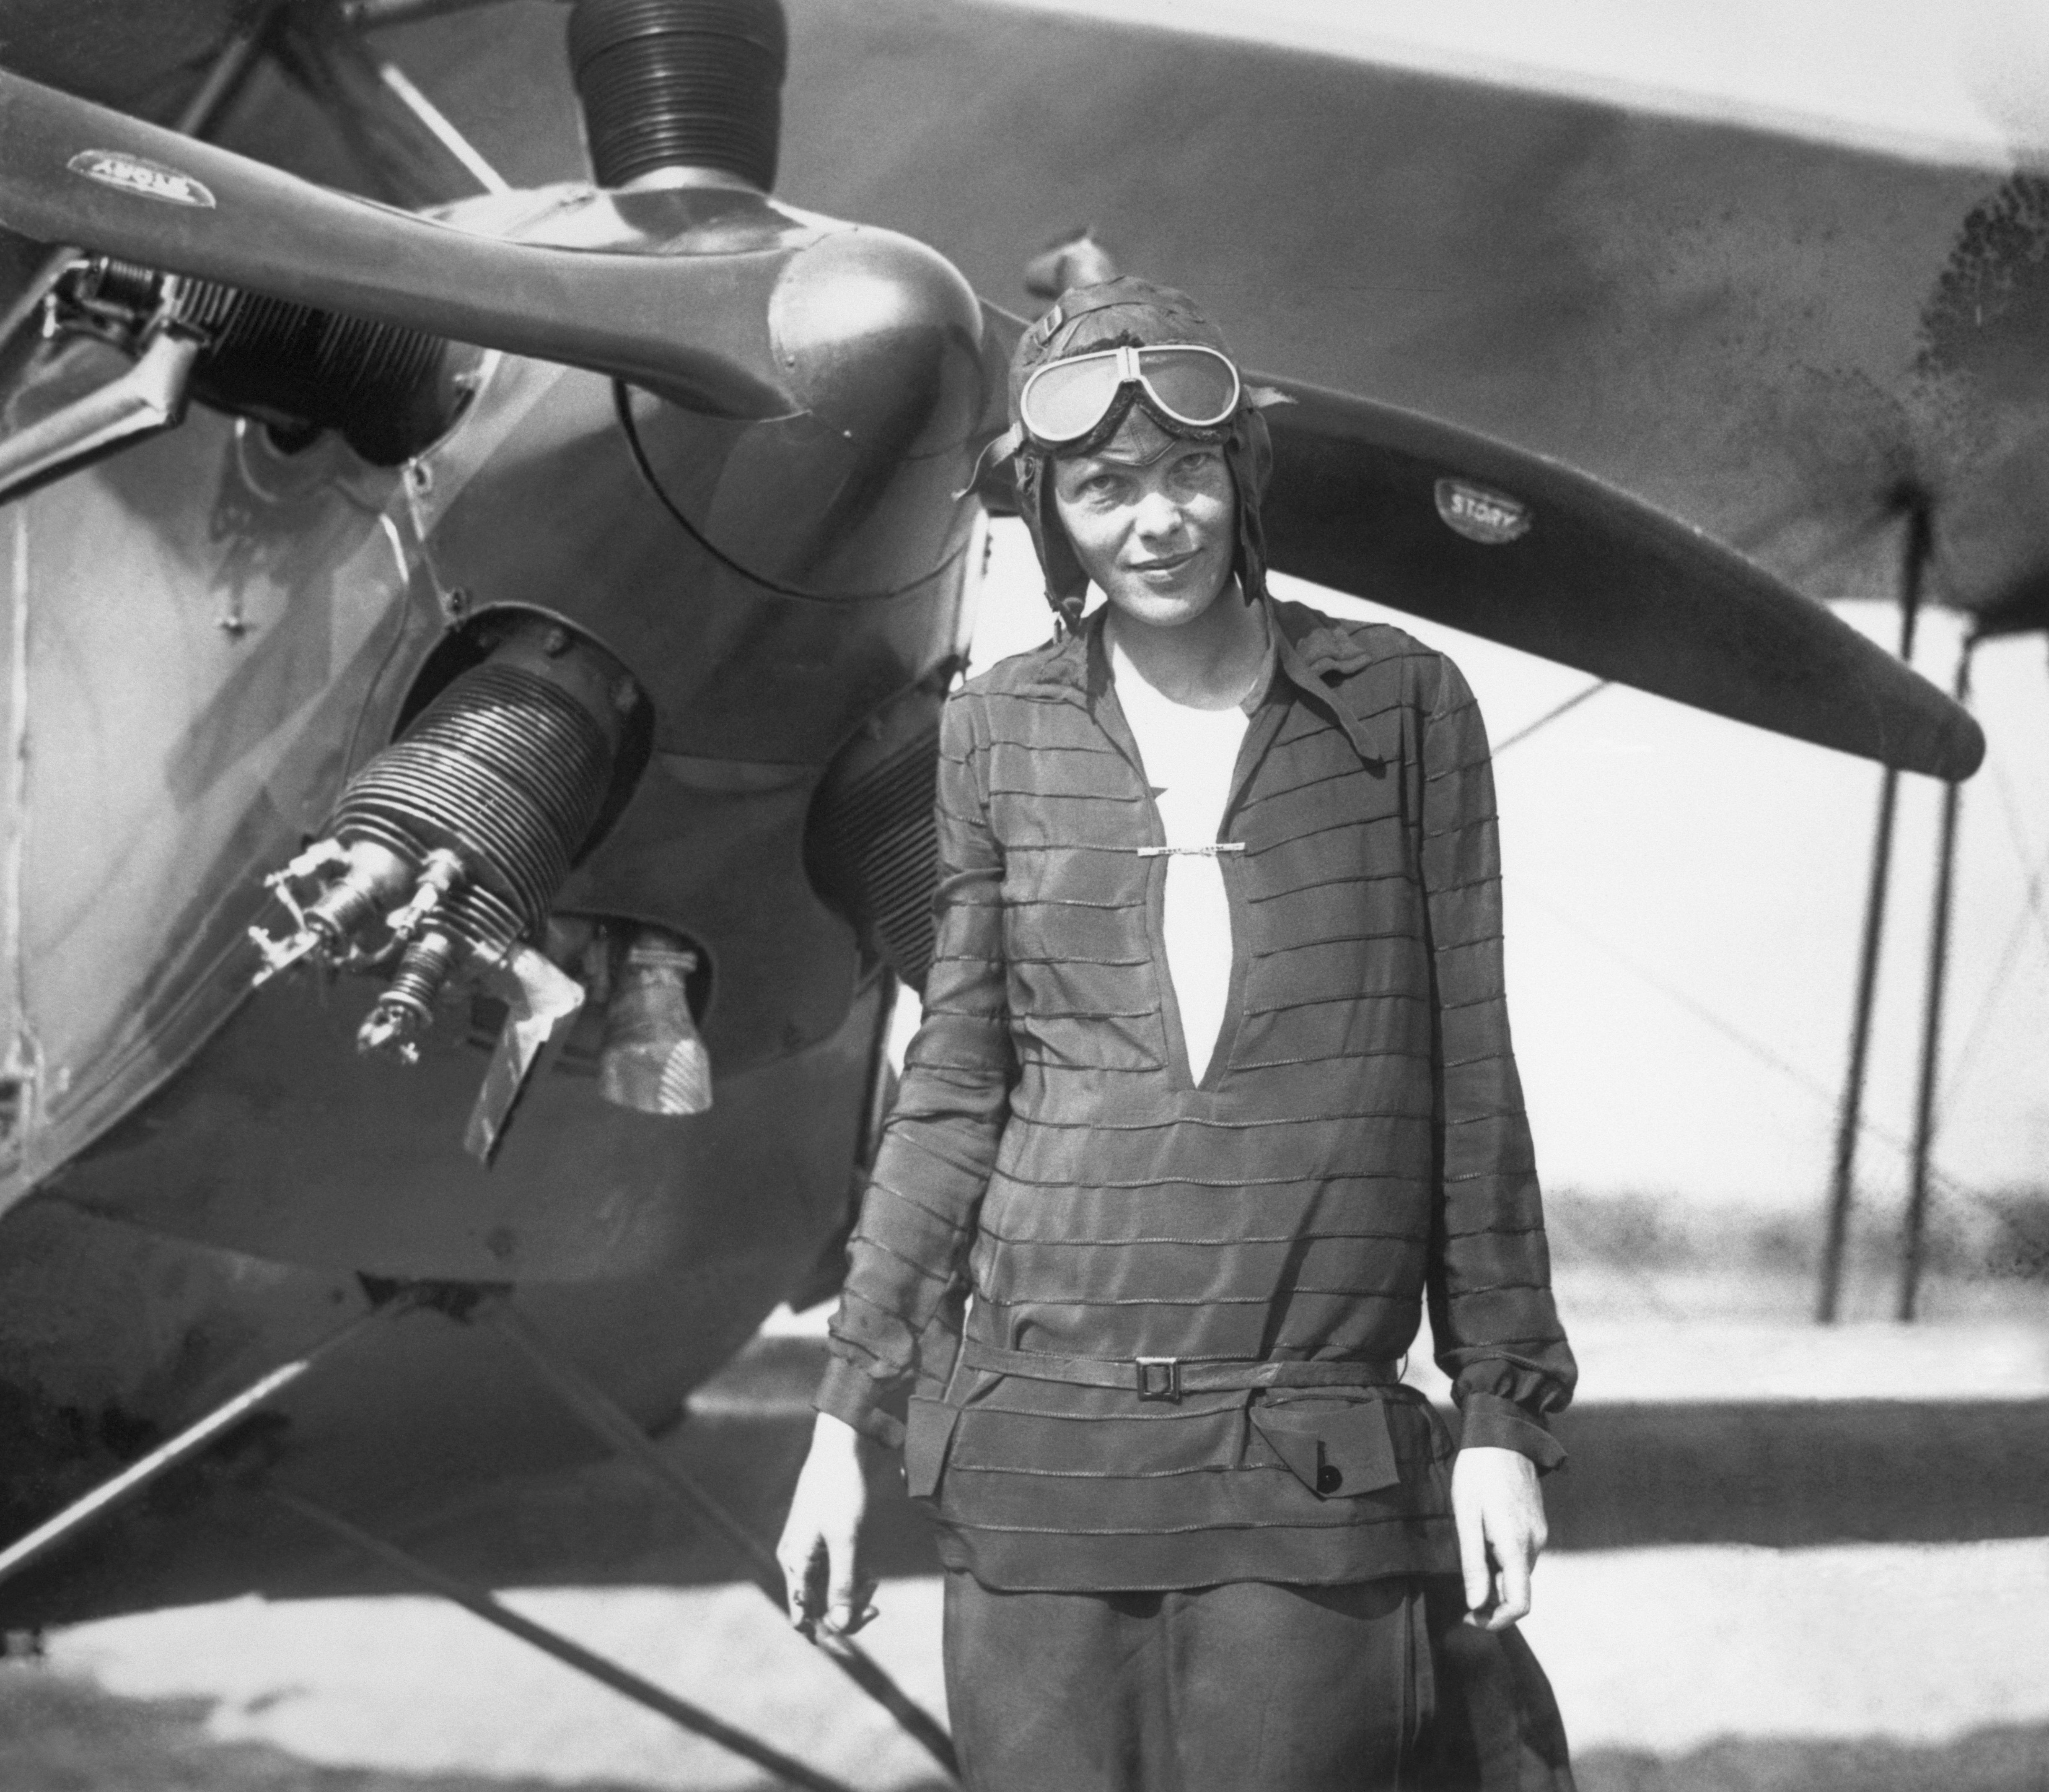 Earhart war die erste Frau, die alleine den Atlantik überquerte